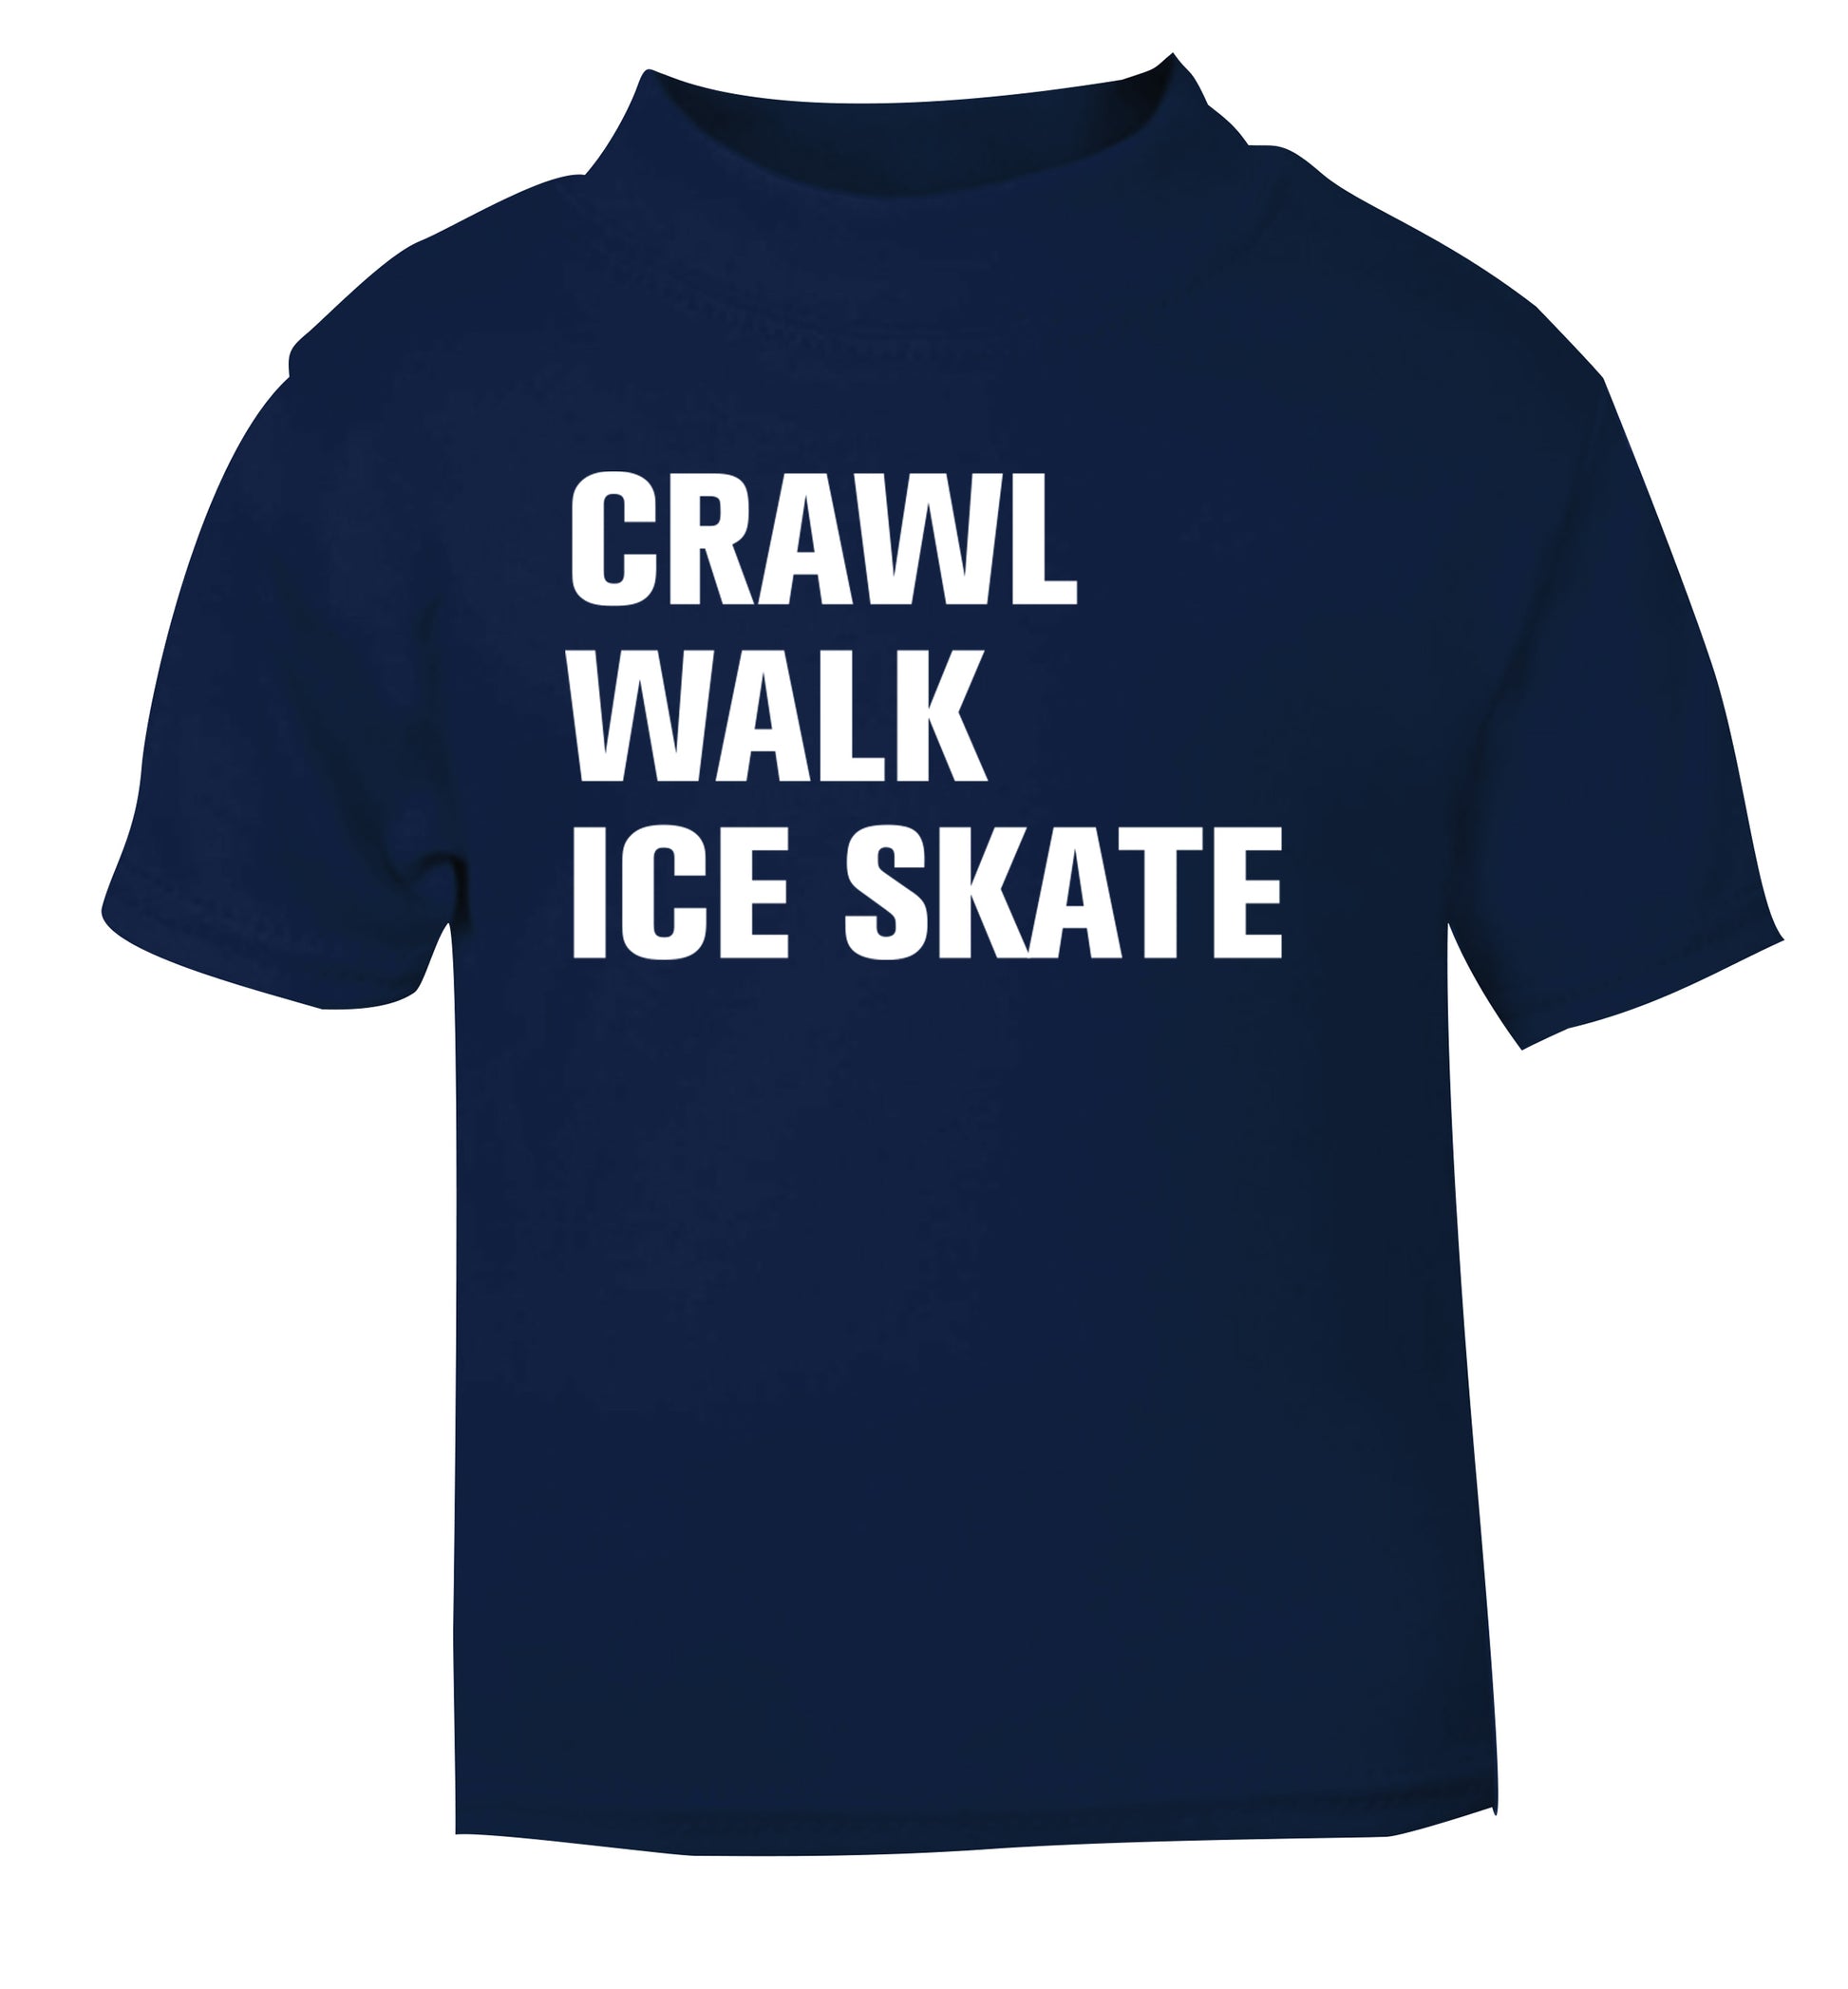 Crawl walk ice skate navy Baby Toddler Tshirt 2 Years